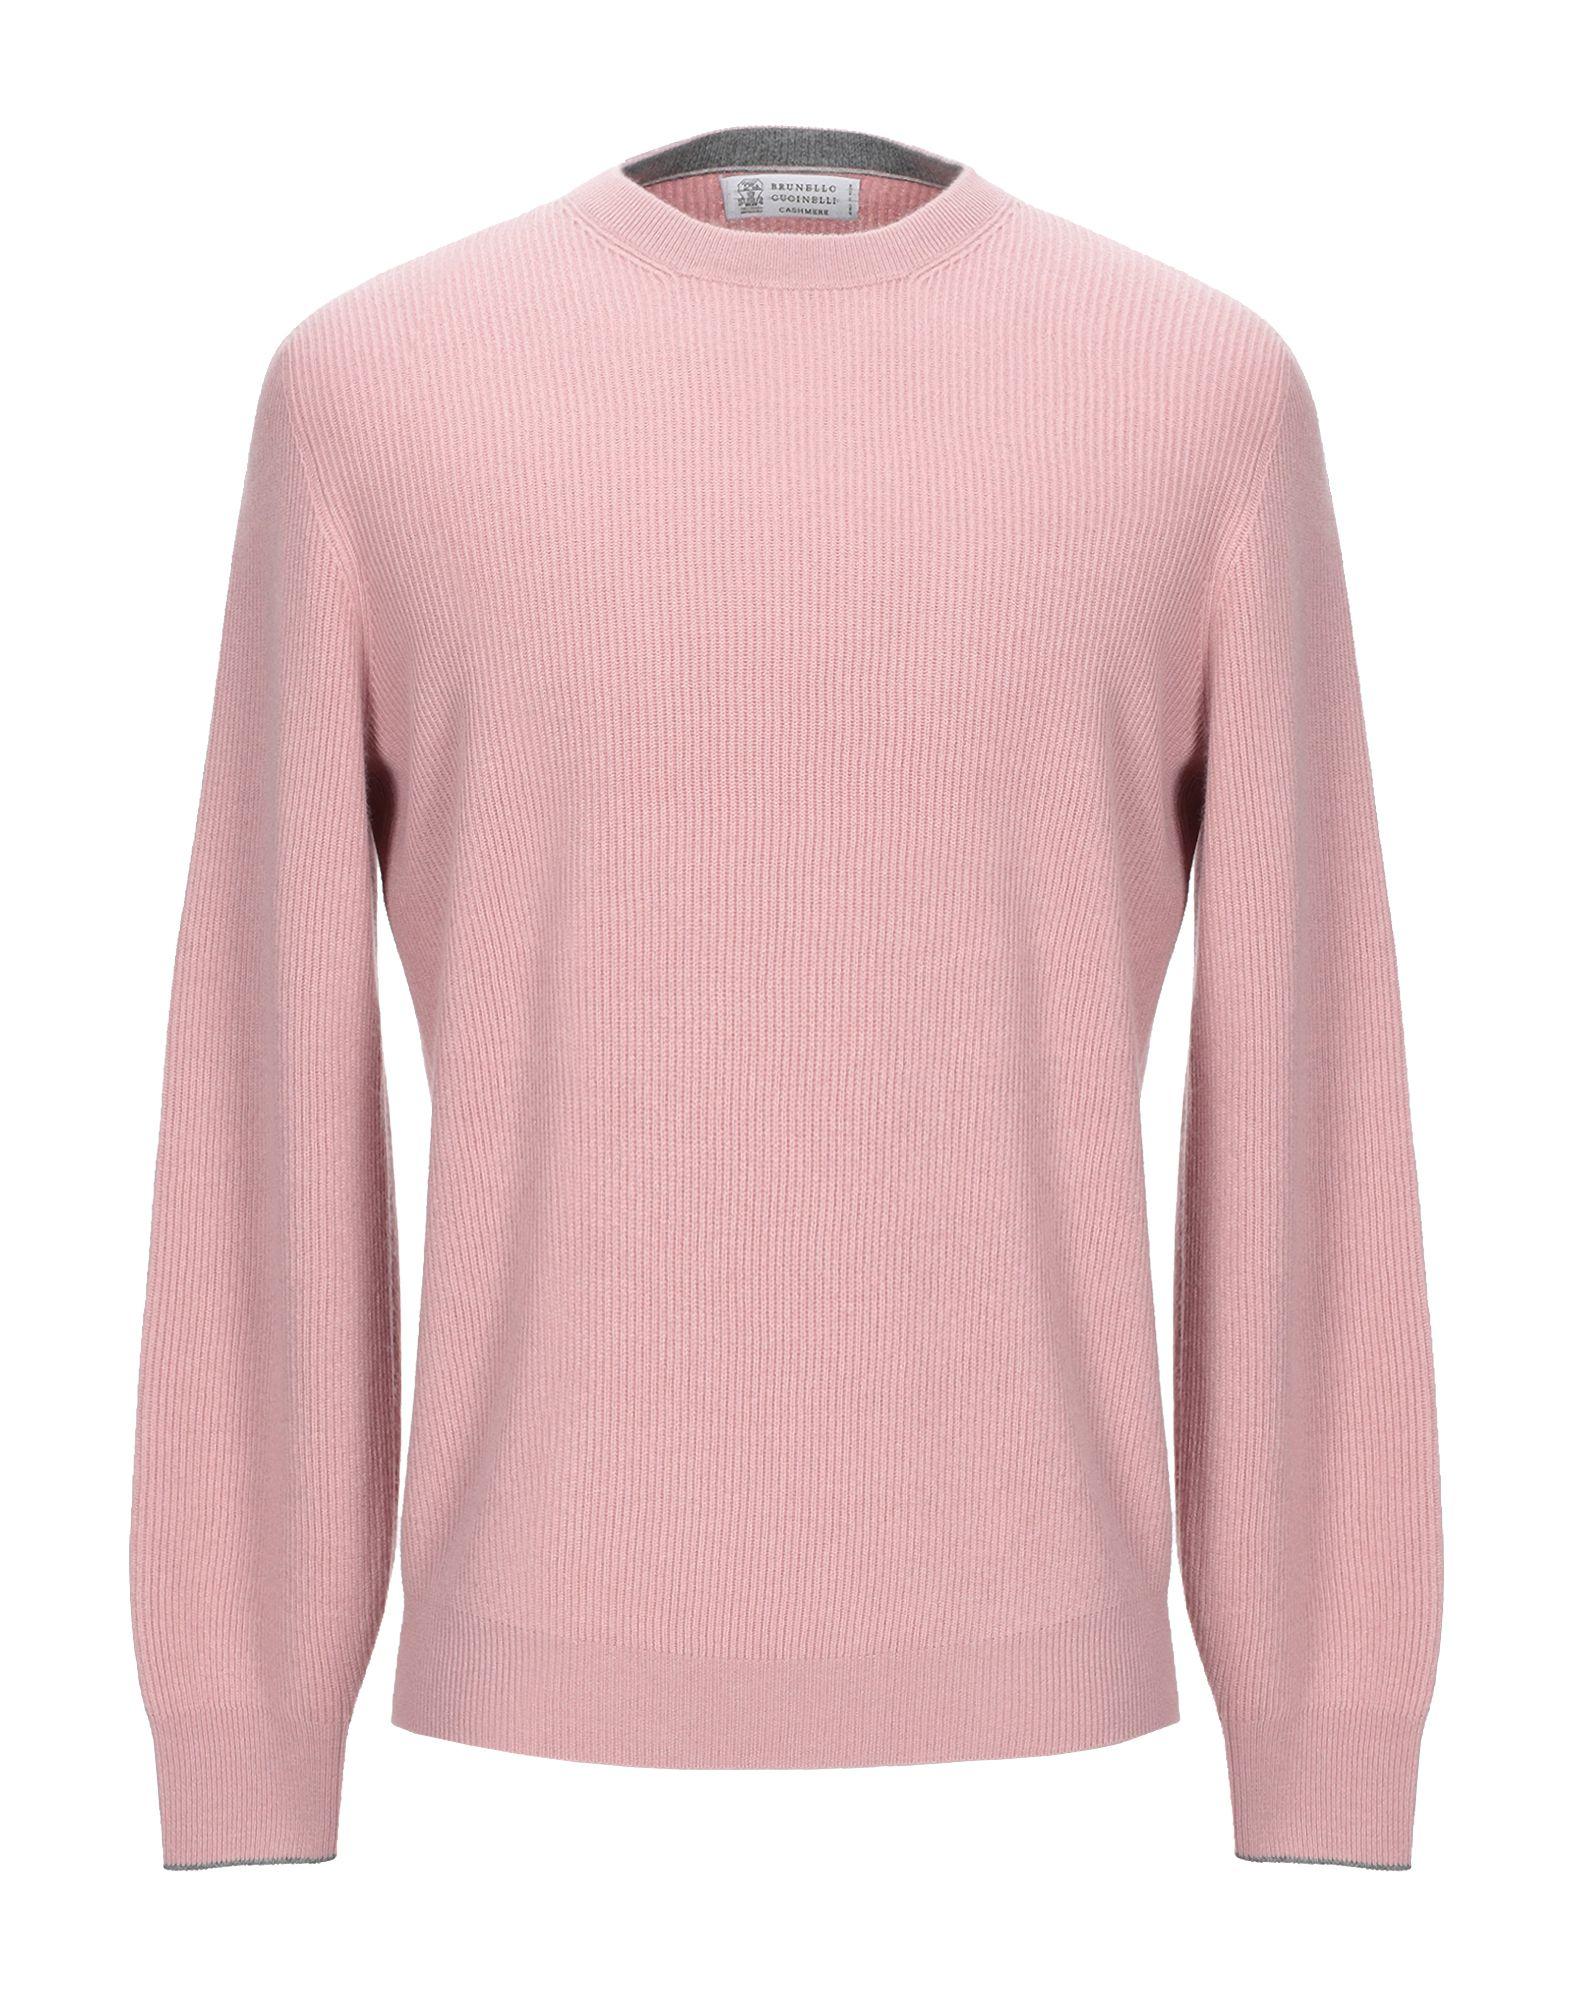 Brunello Cucinelli Sweater in Pink for Men - Lyst